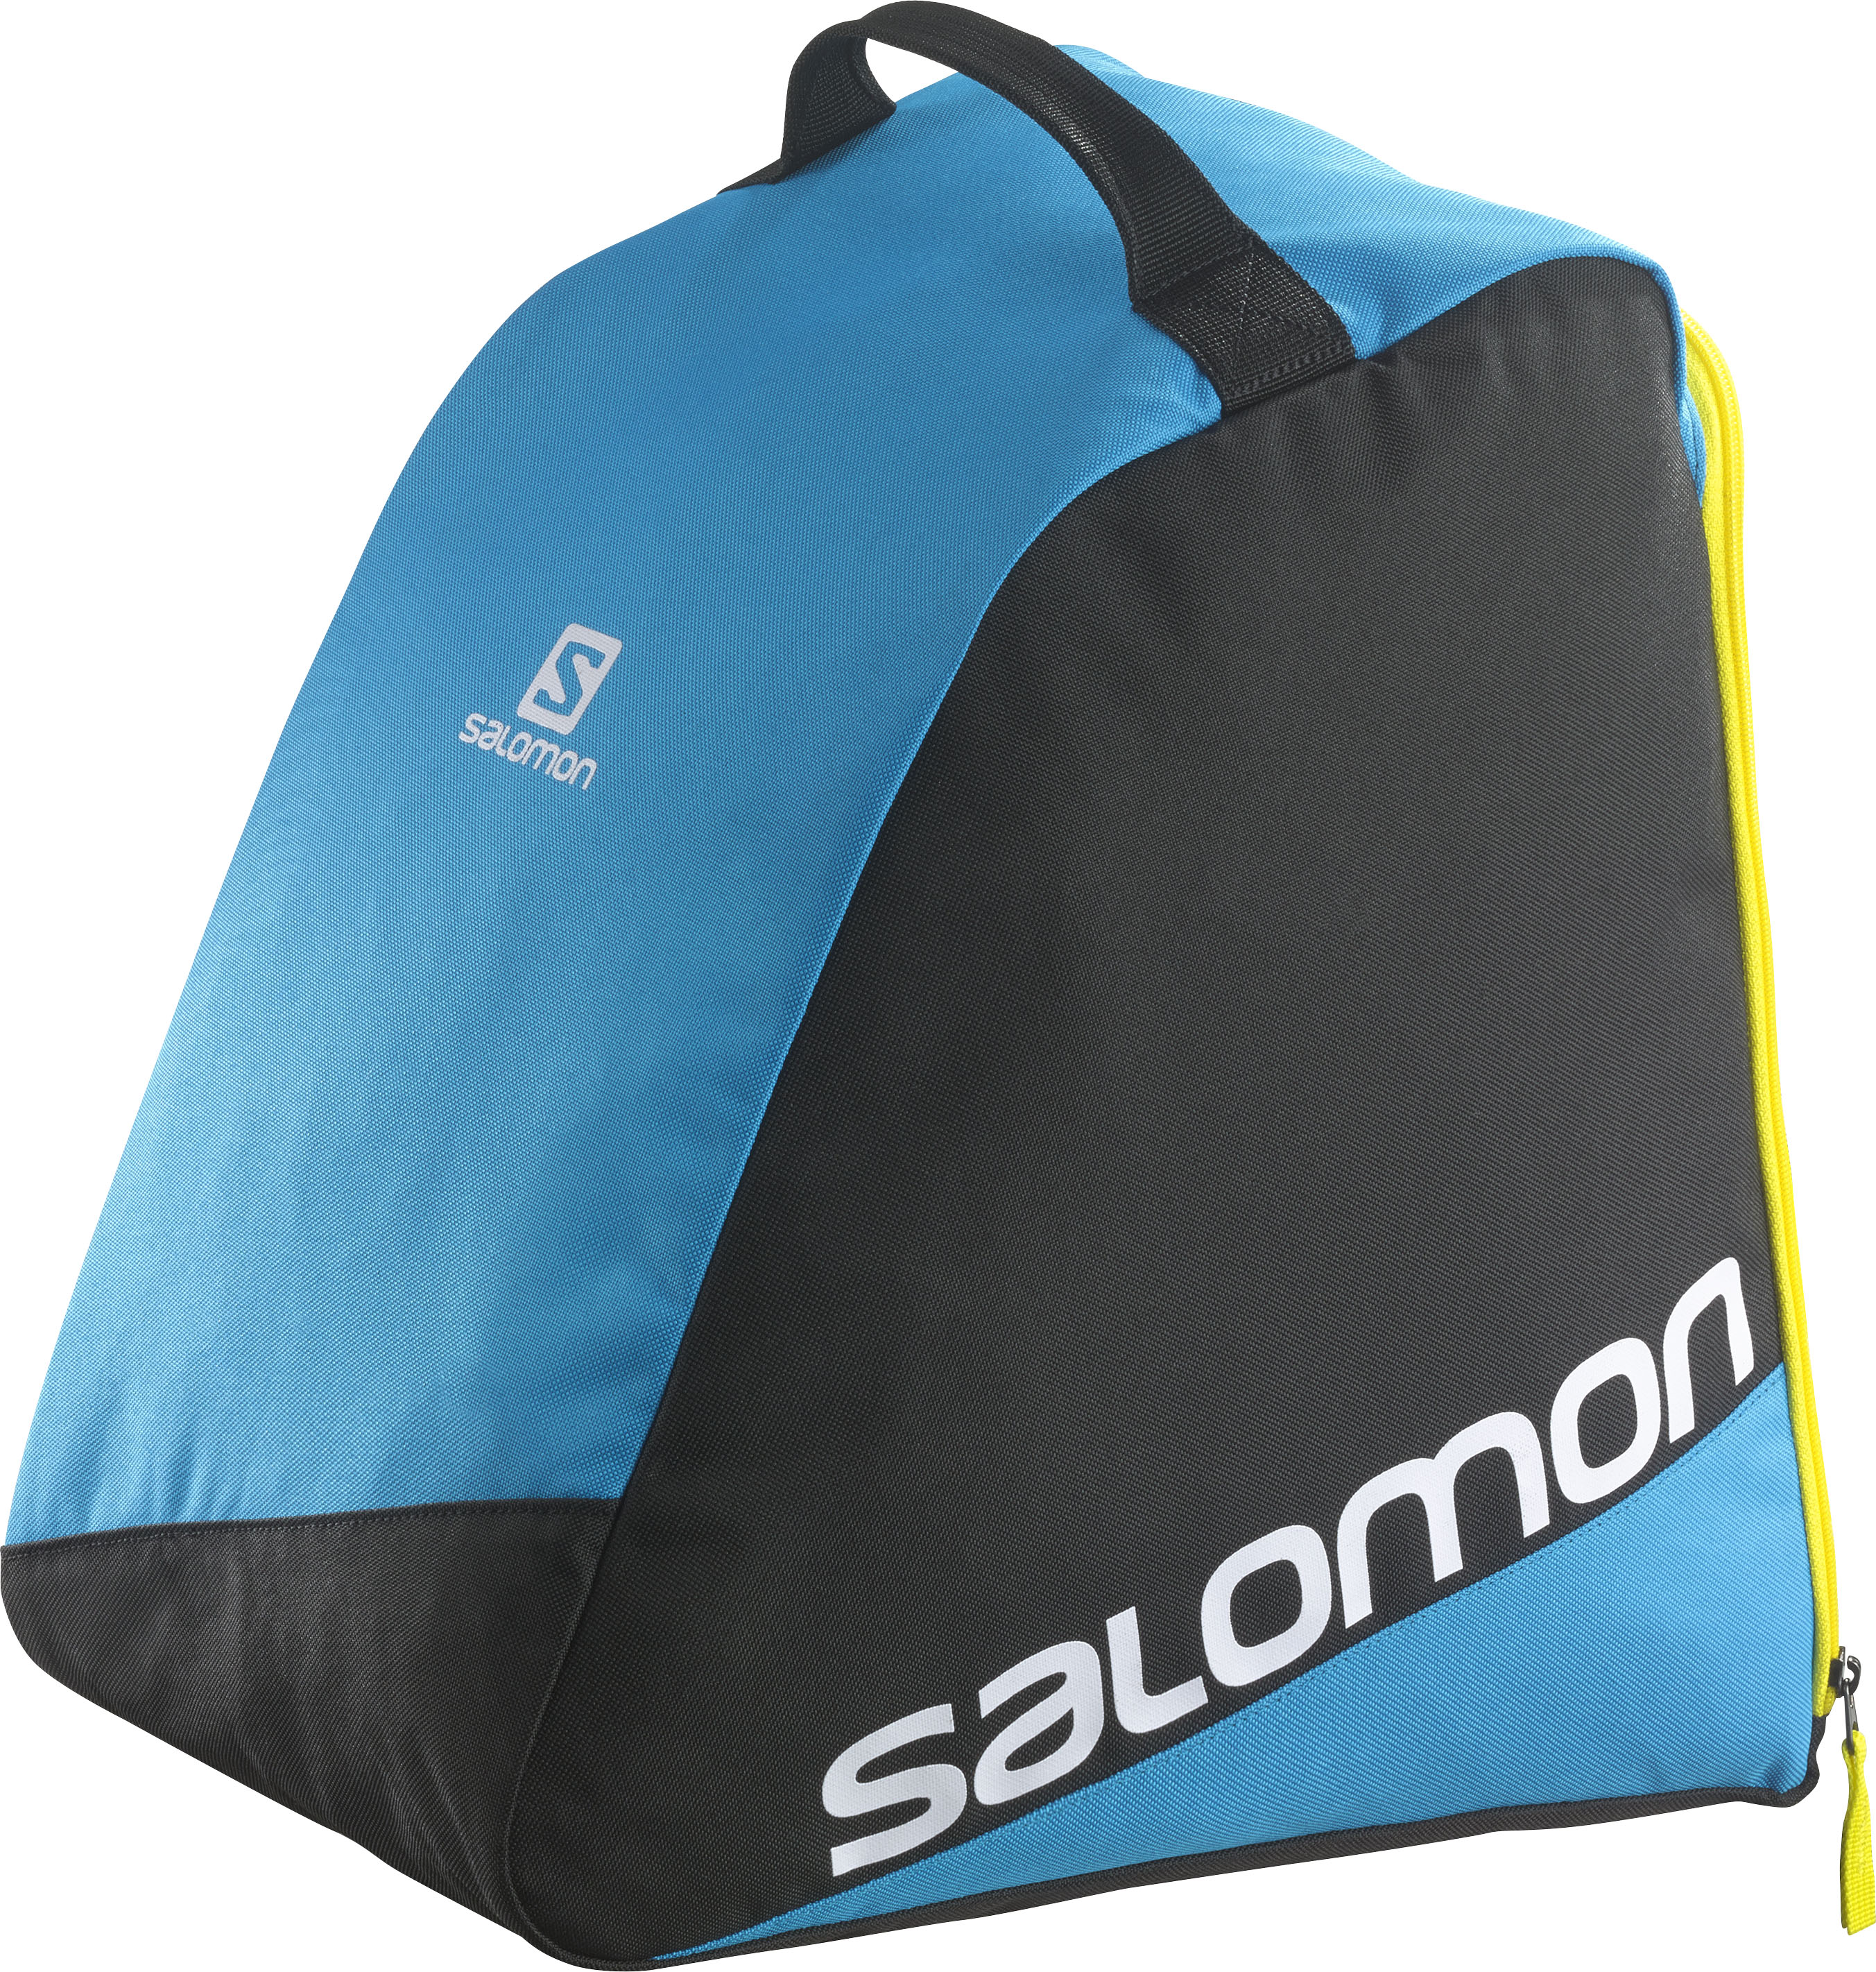 Salomon Skischuhtasche Original Boot Bag blau